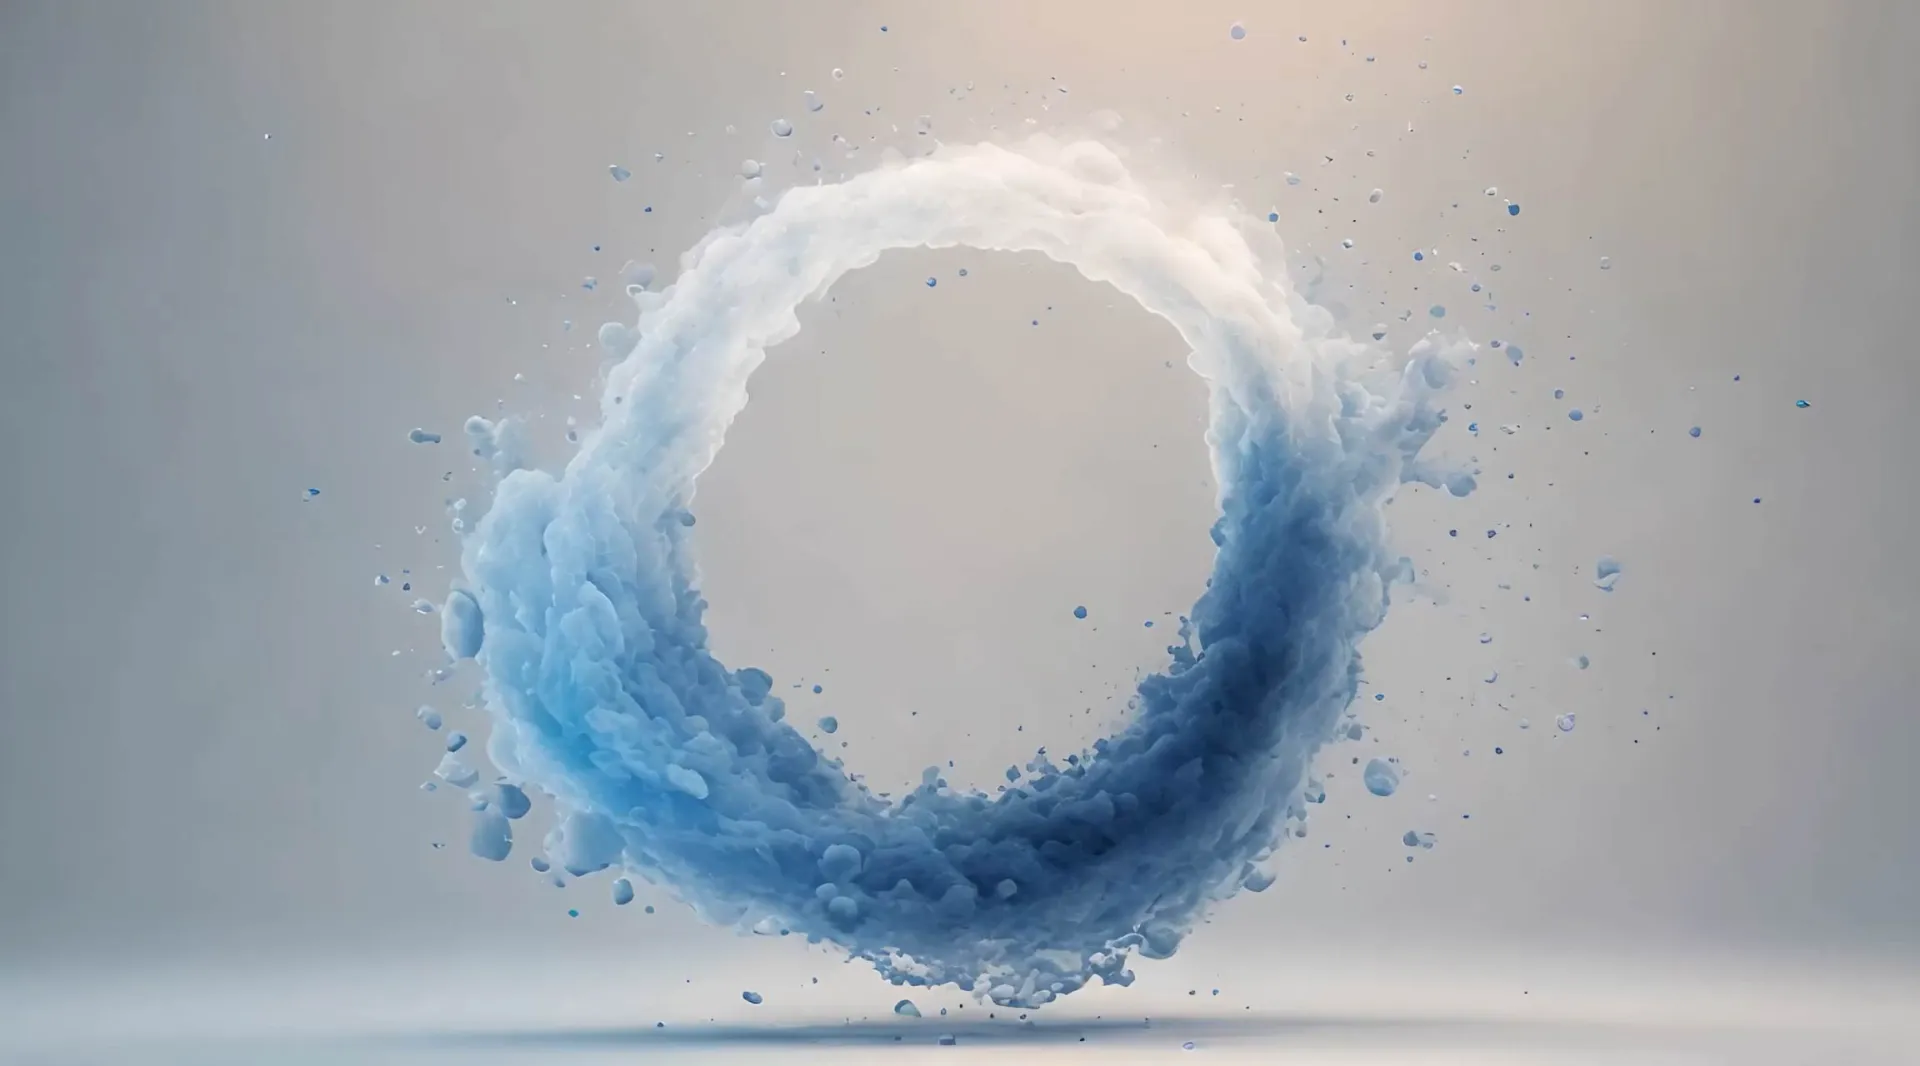 Aqua Vortex Swirling Liquid Motion Video